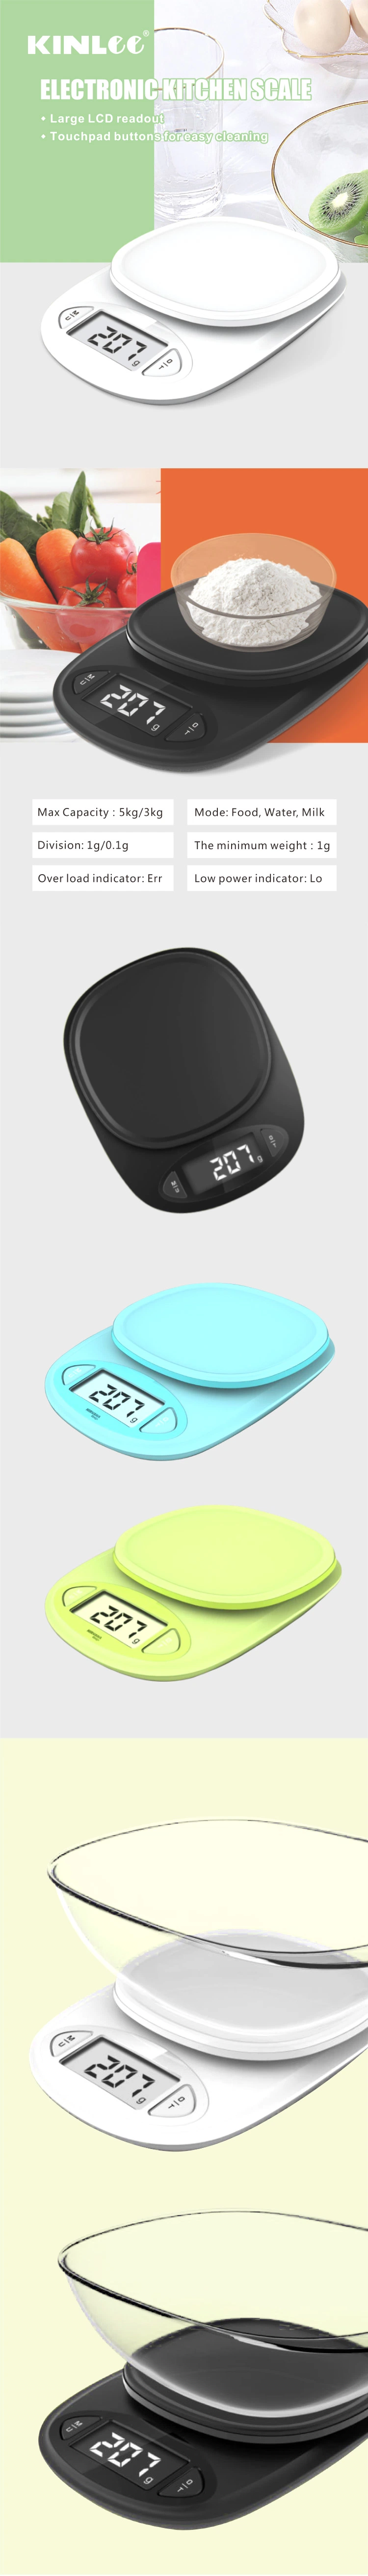 Ek25 Household Multifunction 5kg 3kg Electronic Smart Weighing Digital Kitchen Food Weight Scales